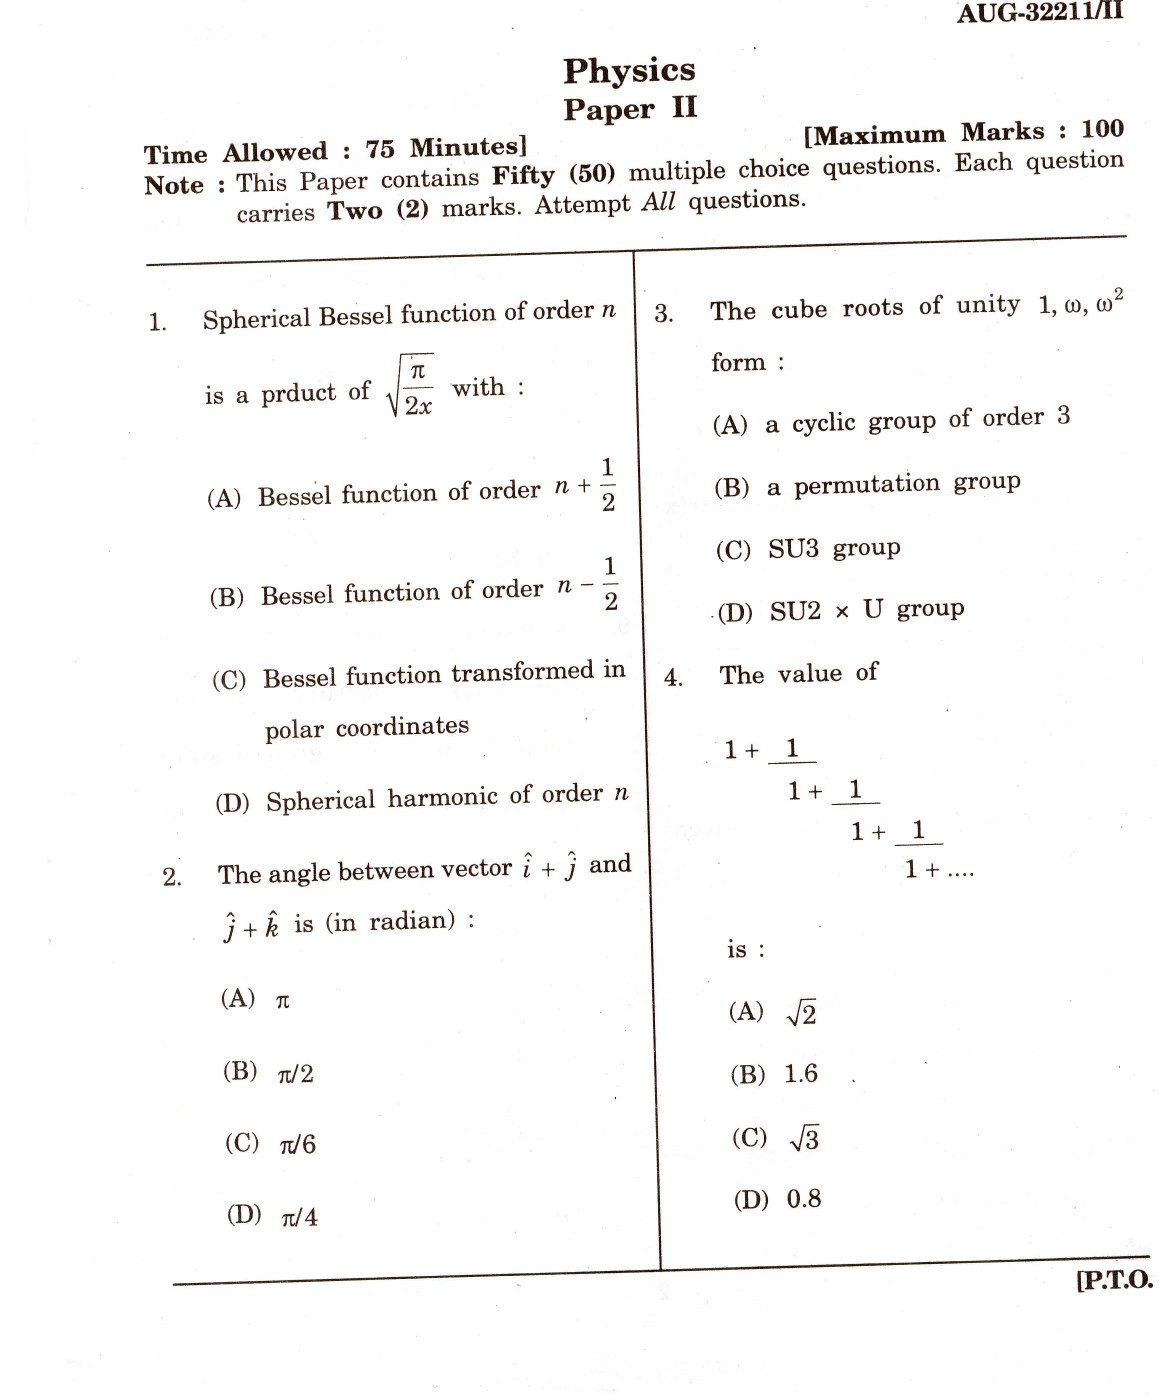 Maharashtra SET Physics Question Paper II August 2011 1